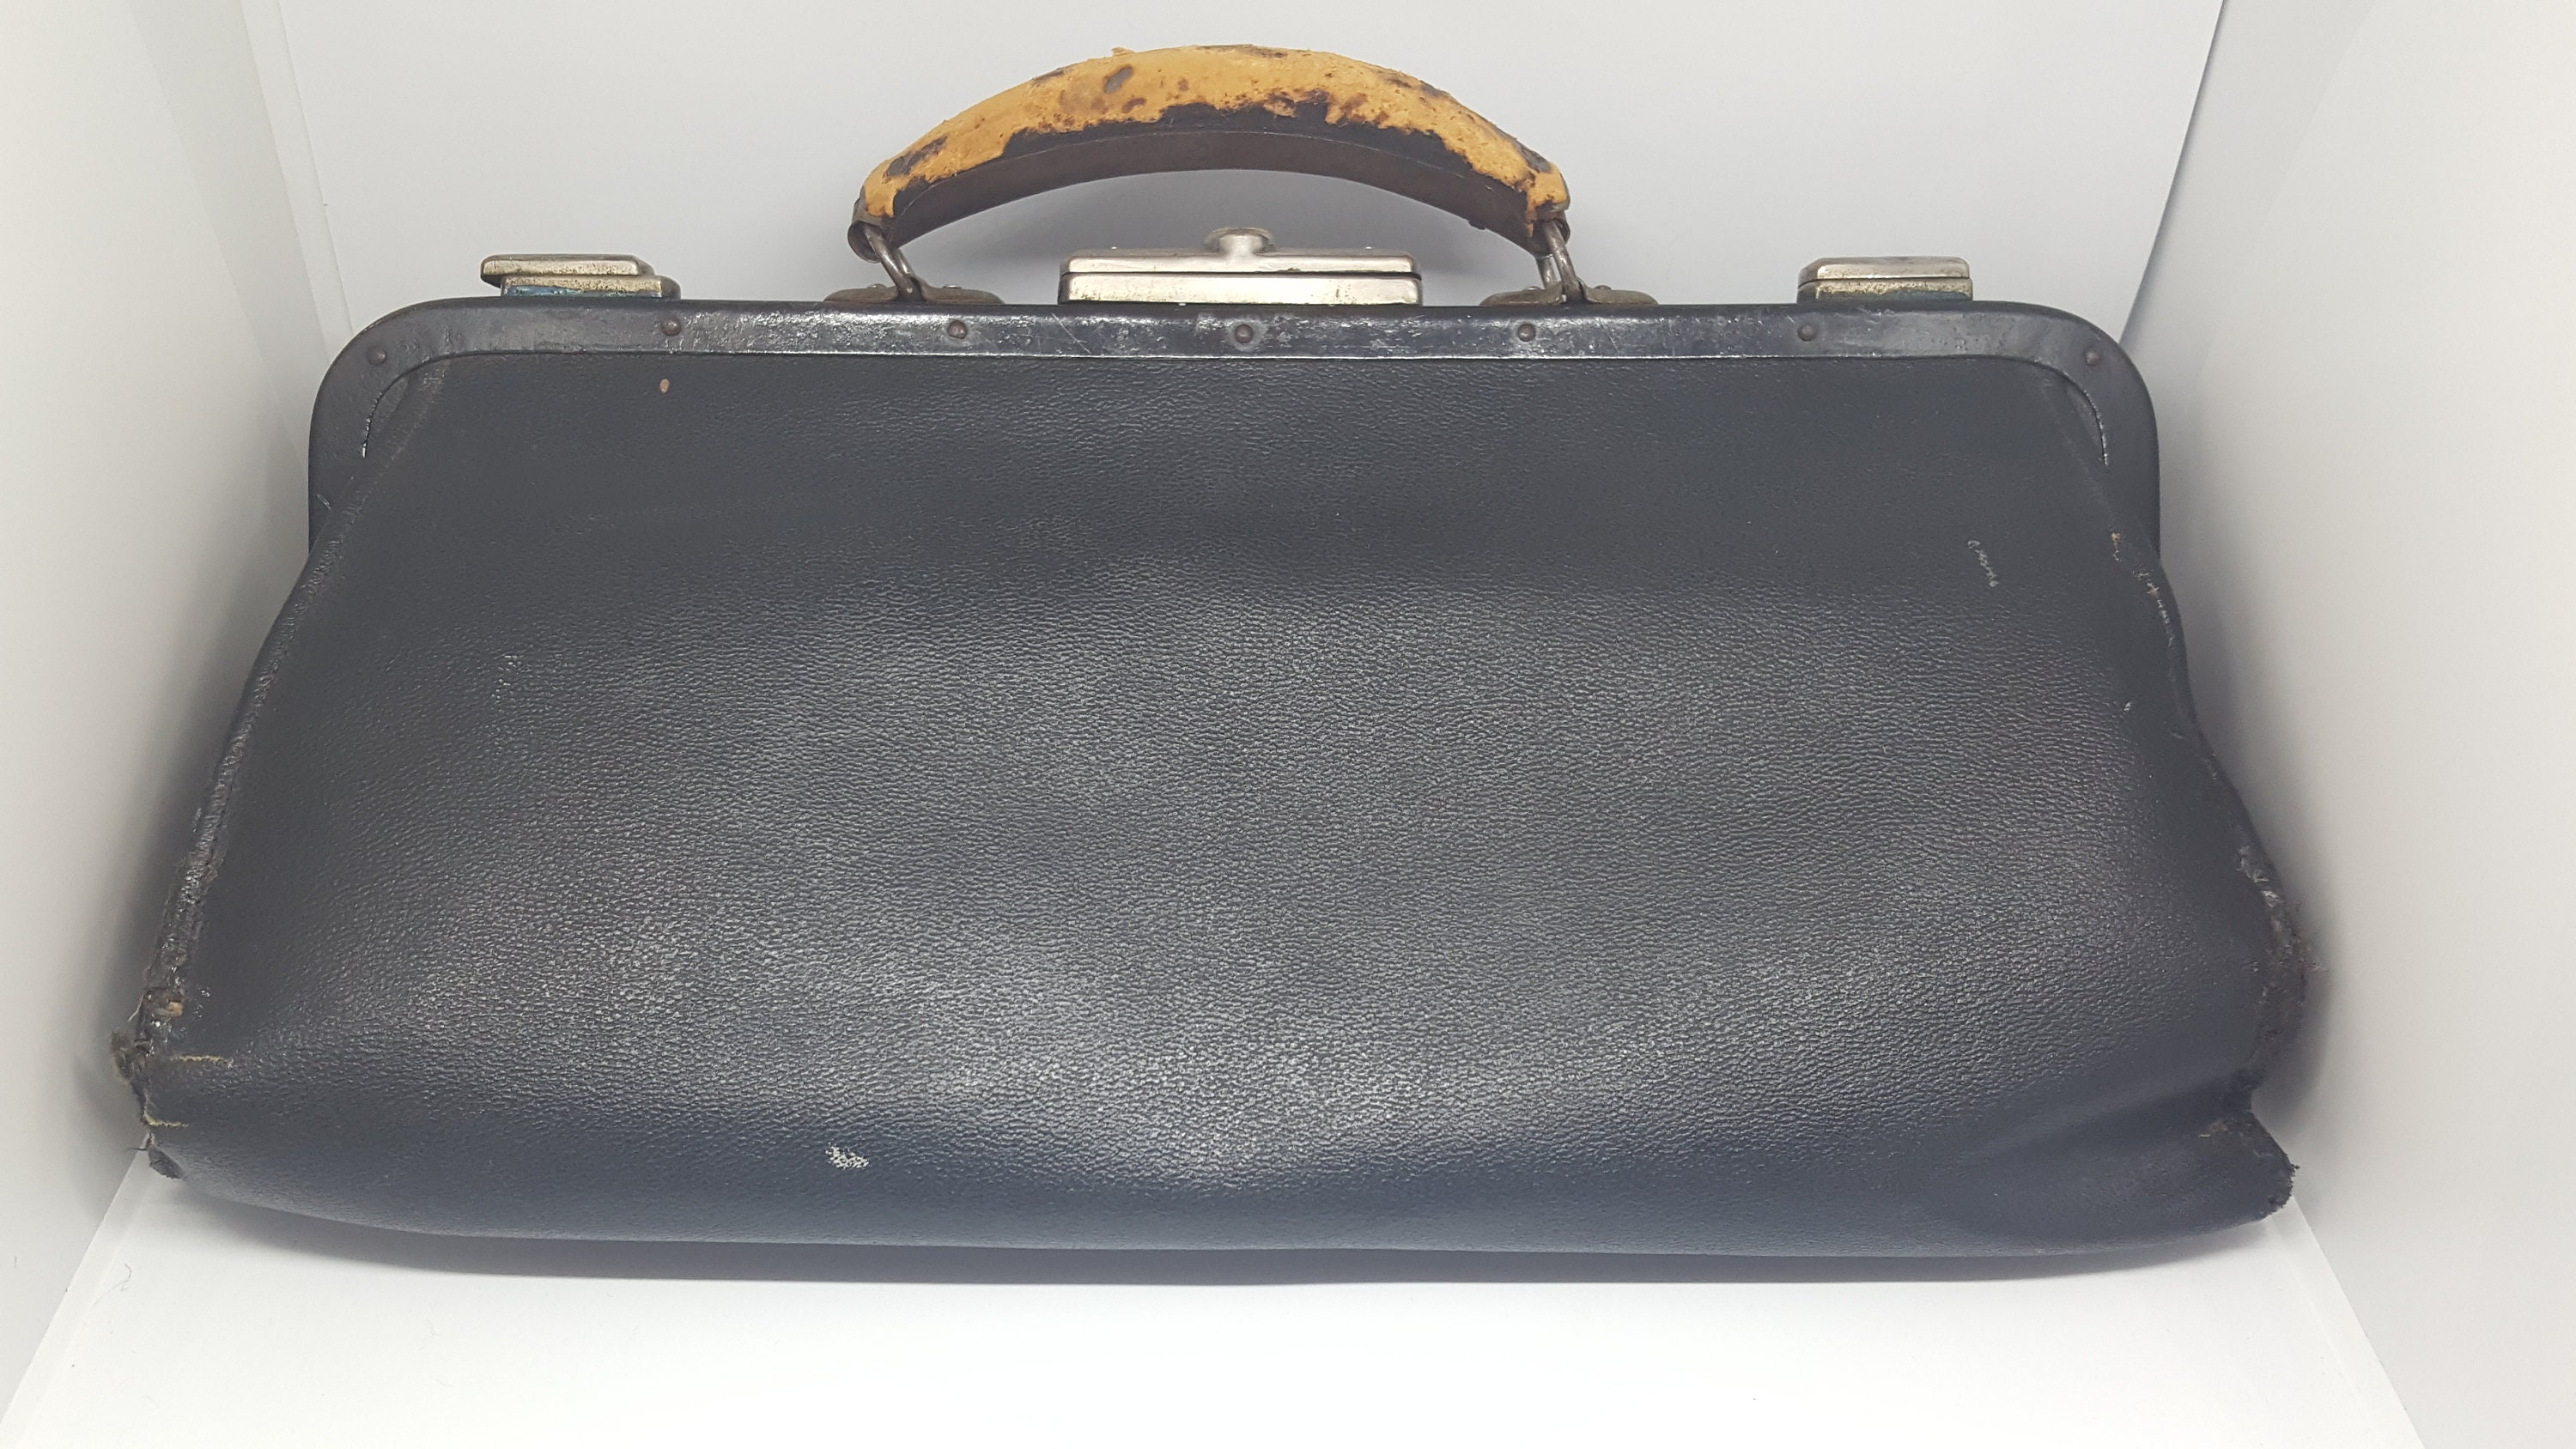 1900s Louis Vuitton leather doctors bag - Pinth Vintage Luggage